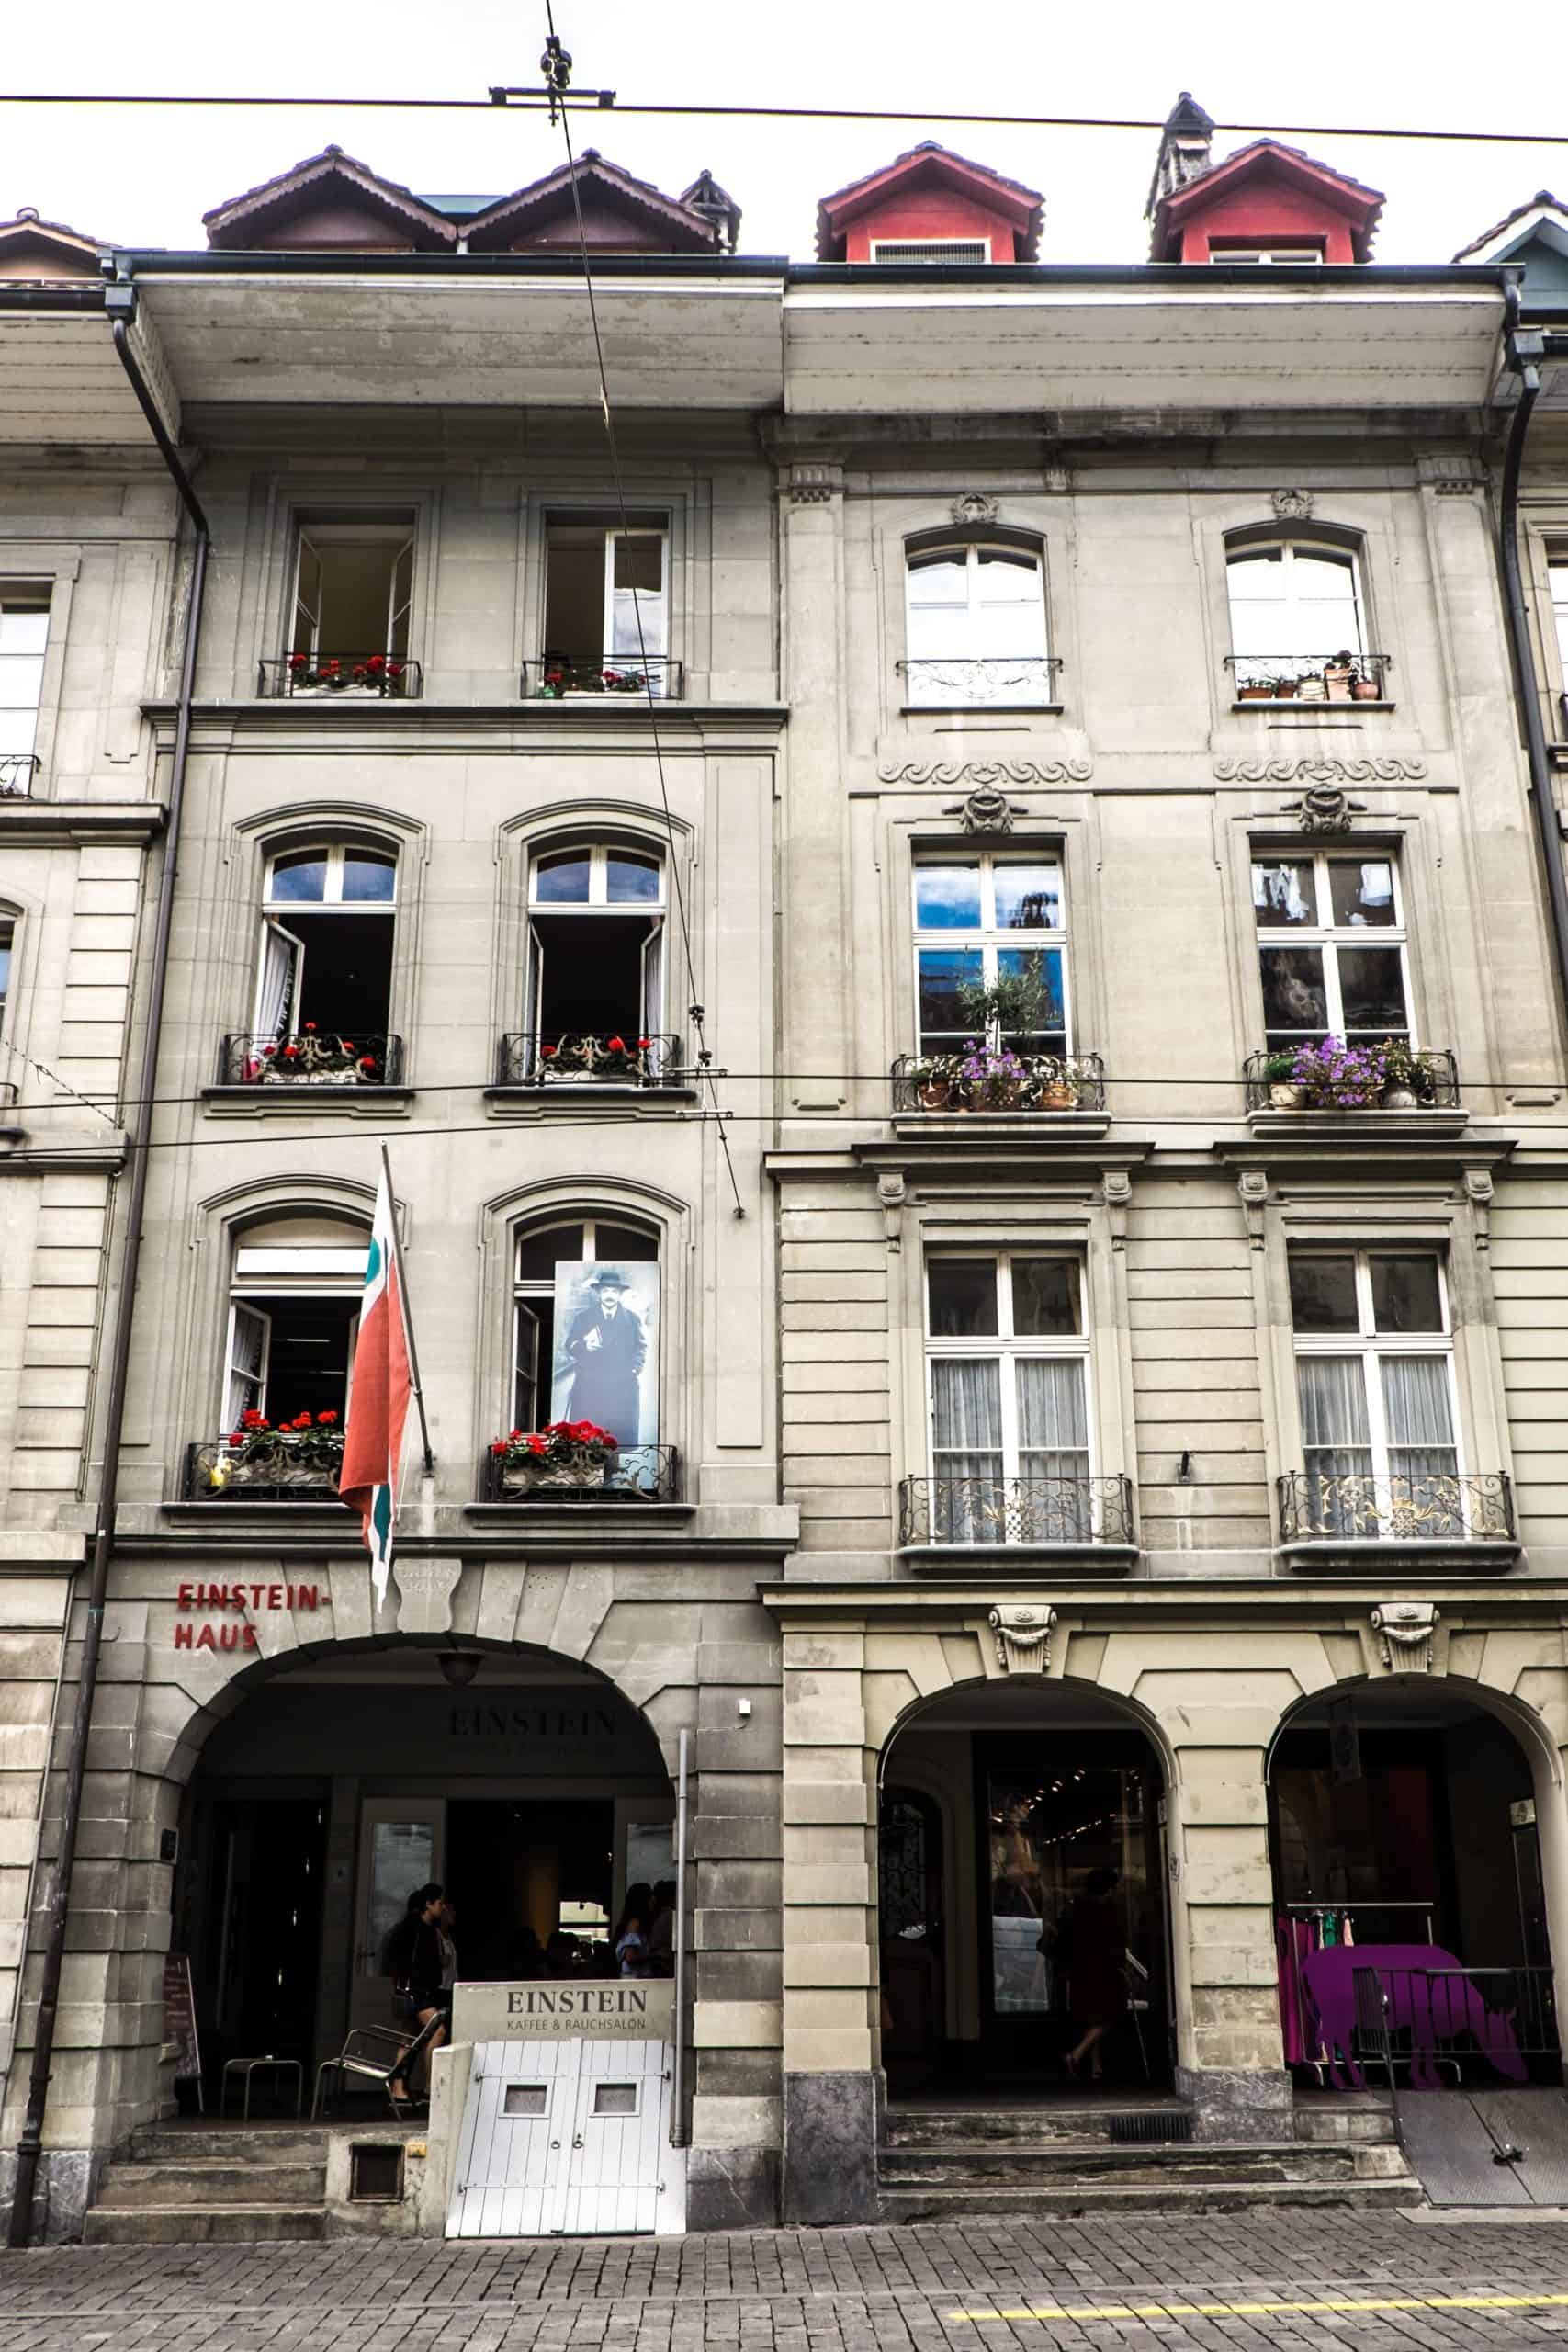 The exterior of the house where Albert Einstein lived in Bern, Switzerland